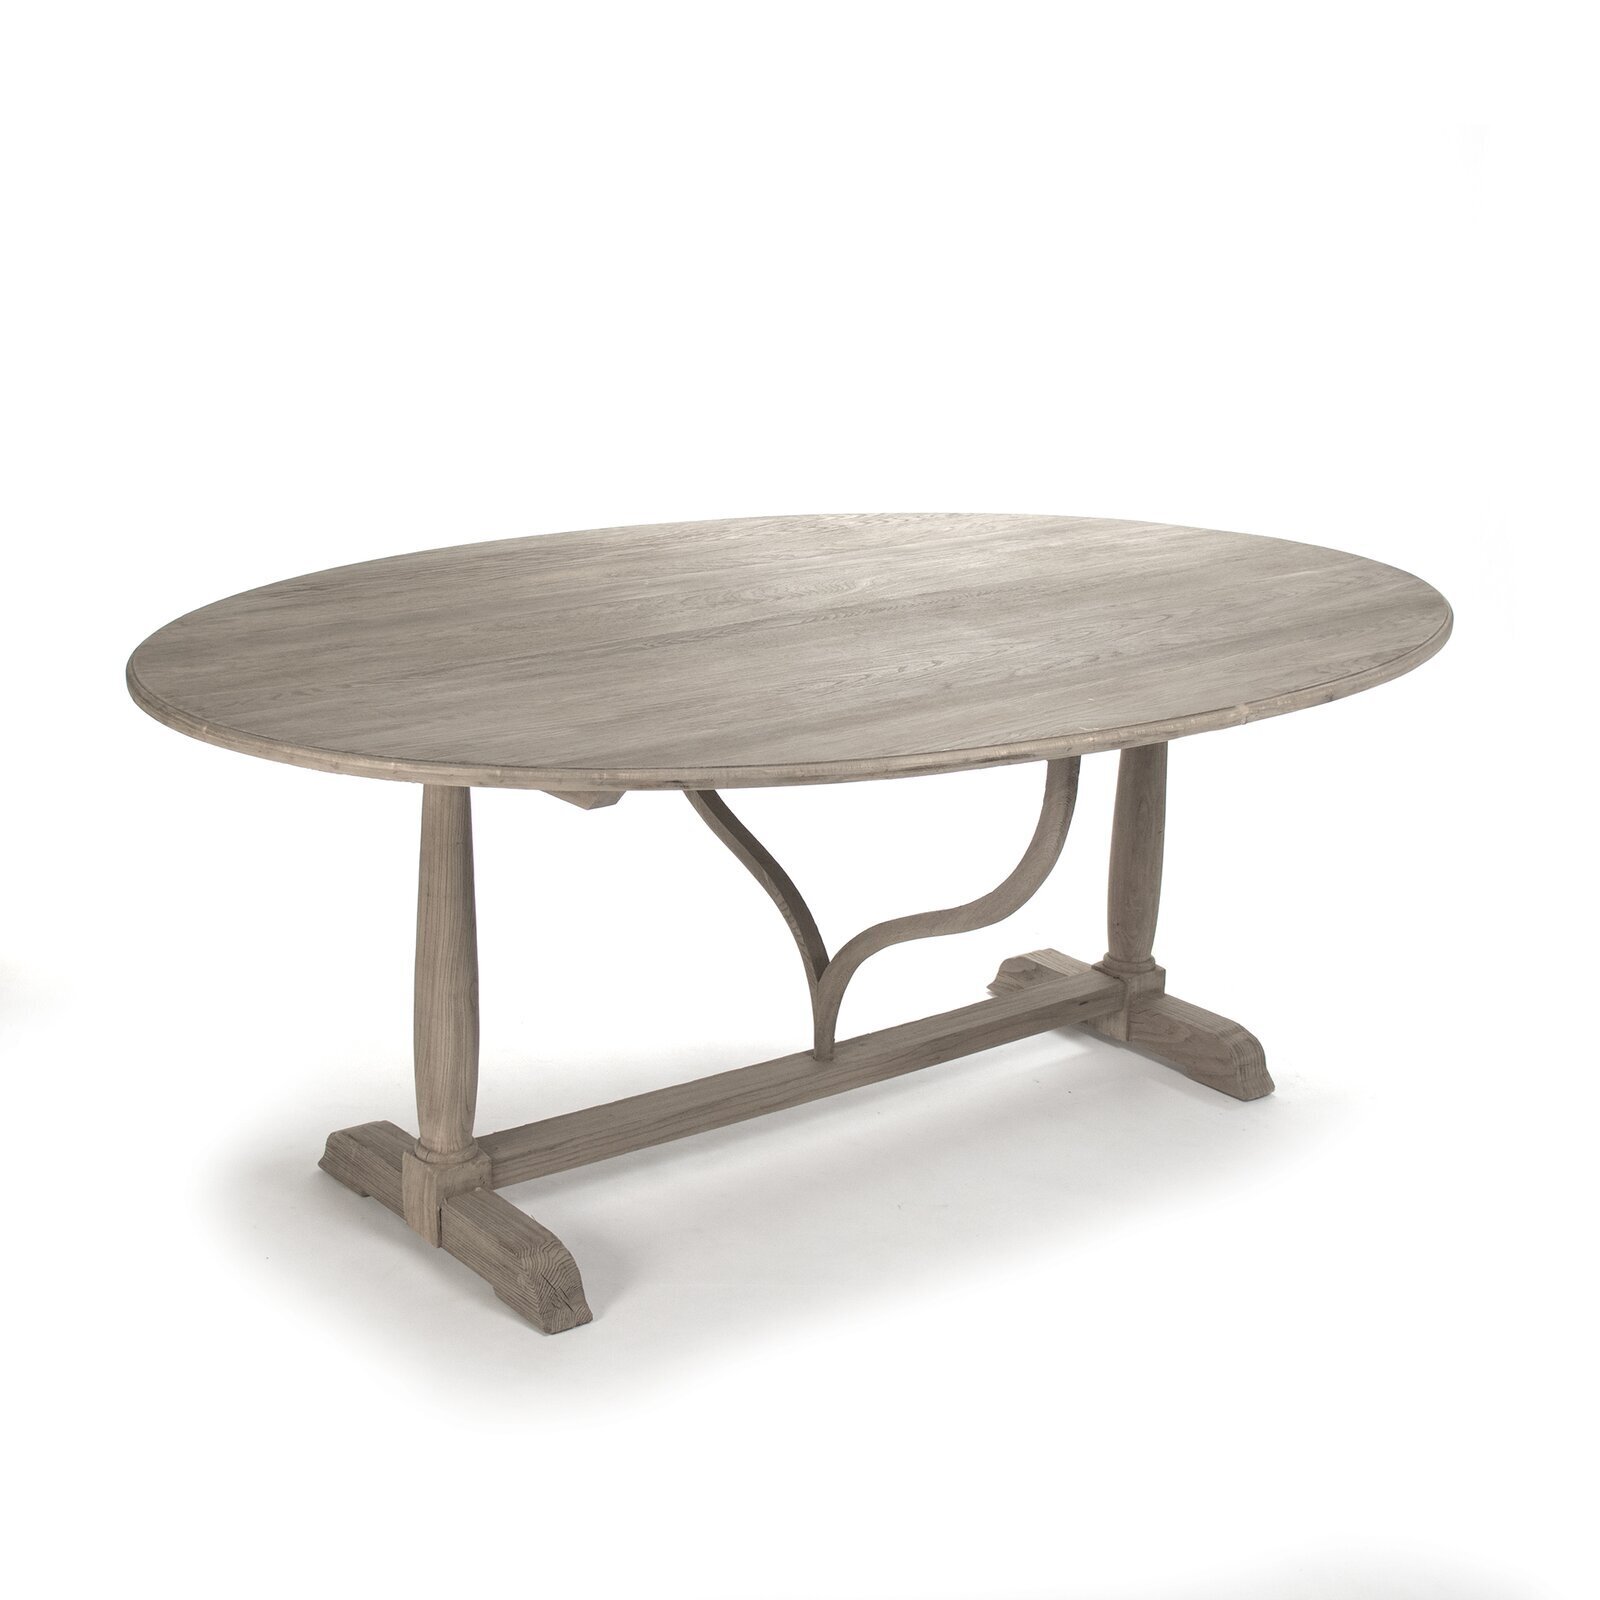 Trestle oval folding table